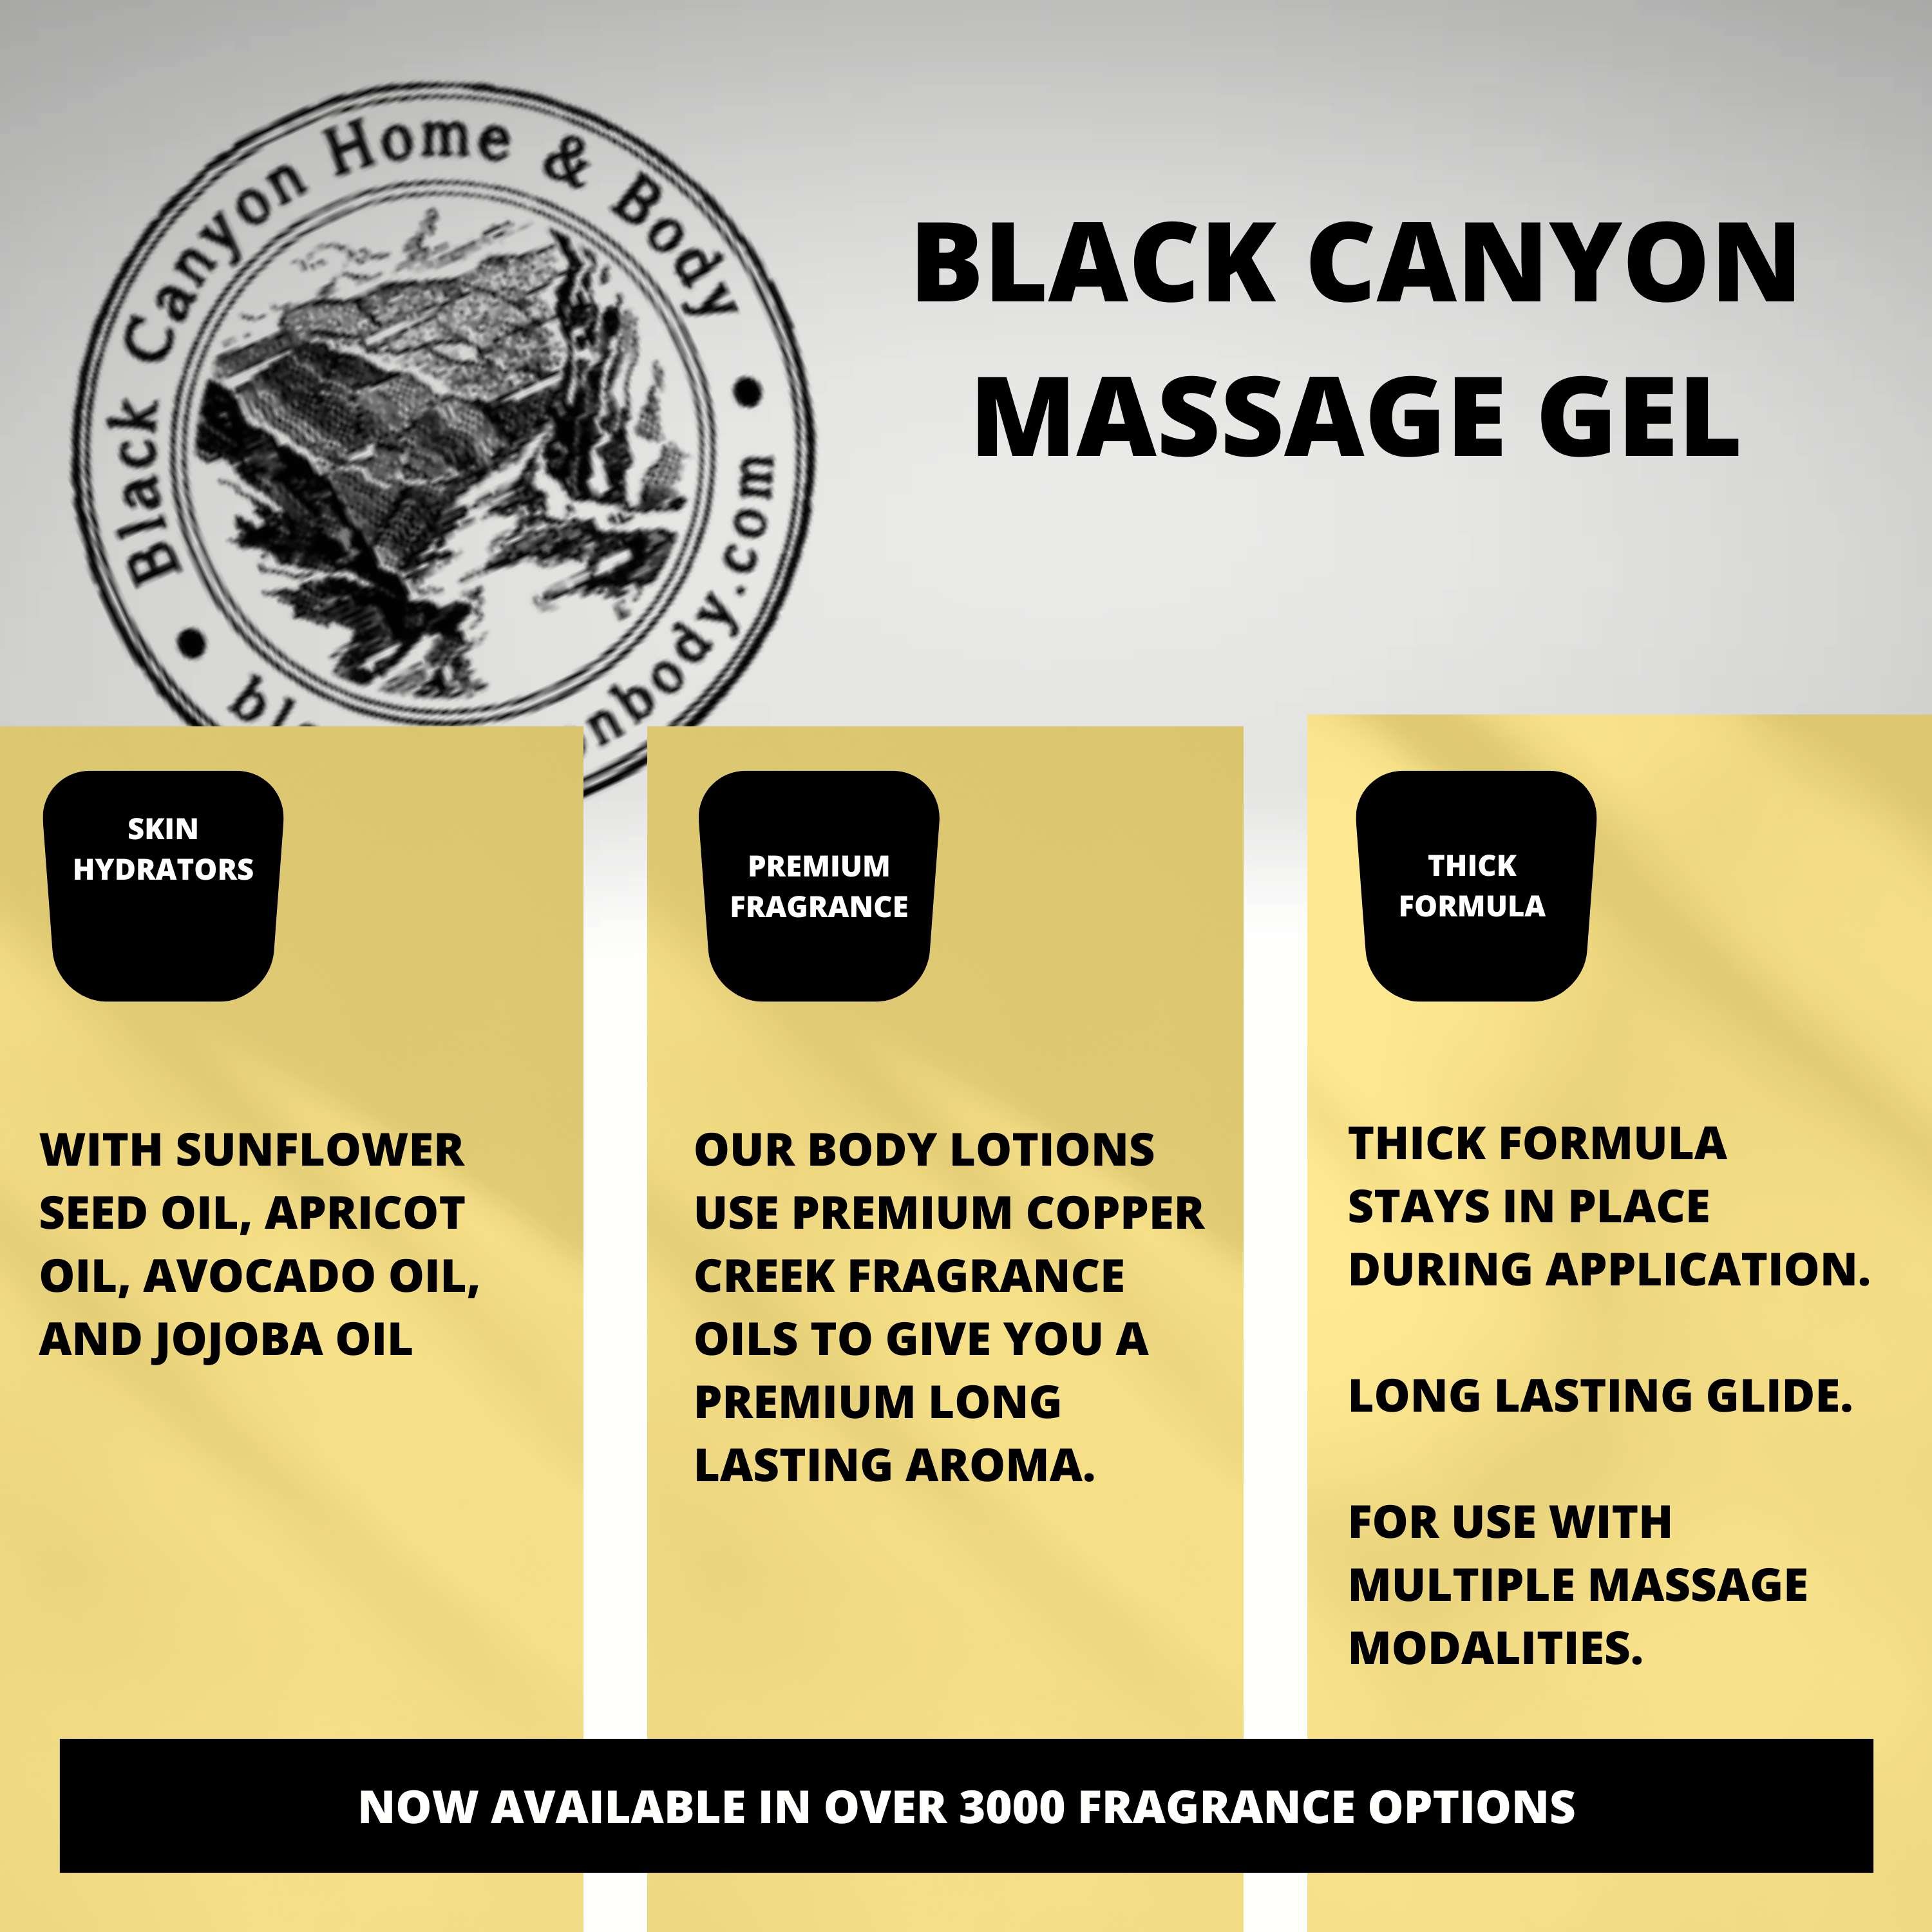 Black Canyon Black Licorice Scented Massage Gel